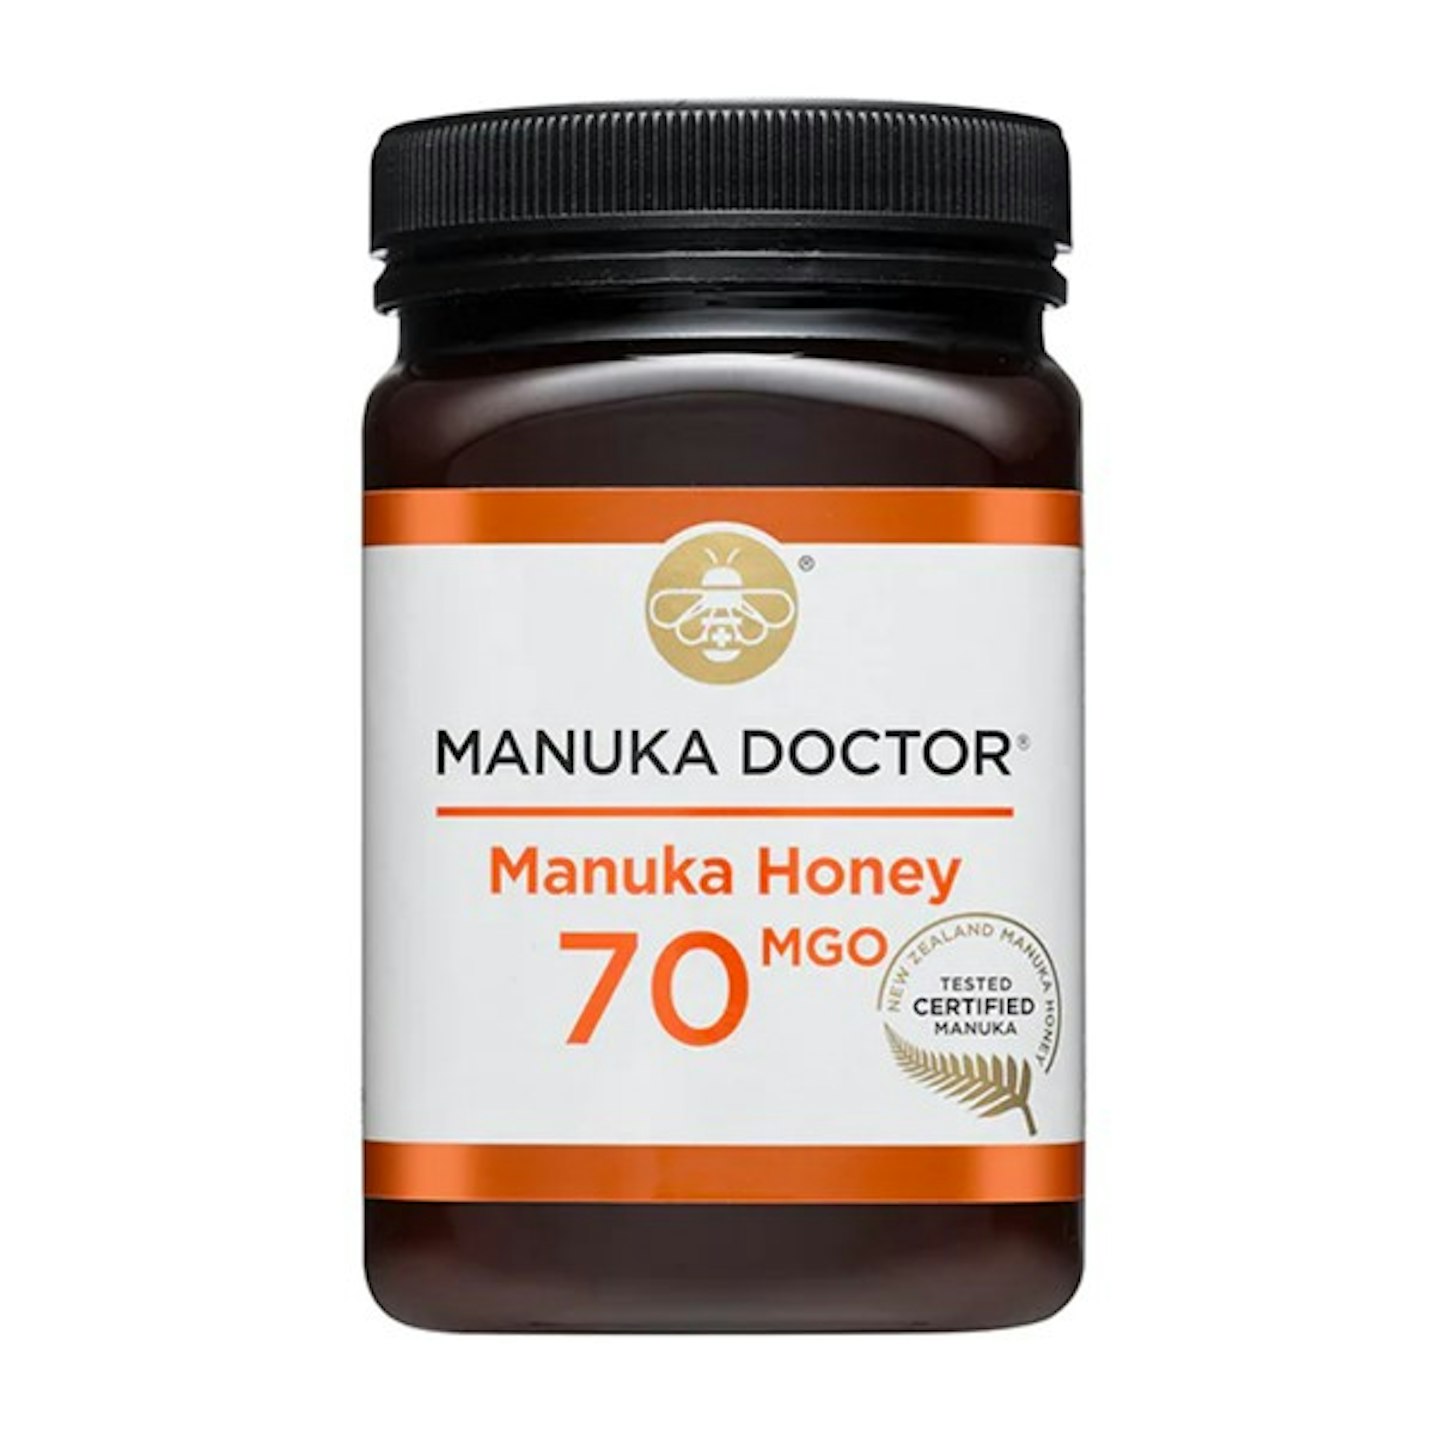 Holland & Barrett Manuka Doctor Manuka Honey MGO 70 500g